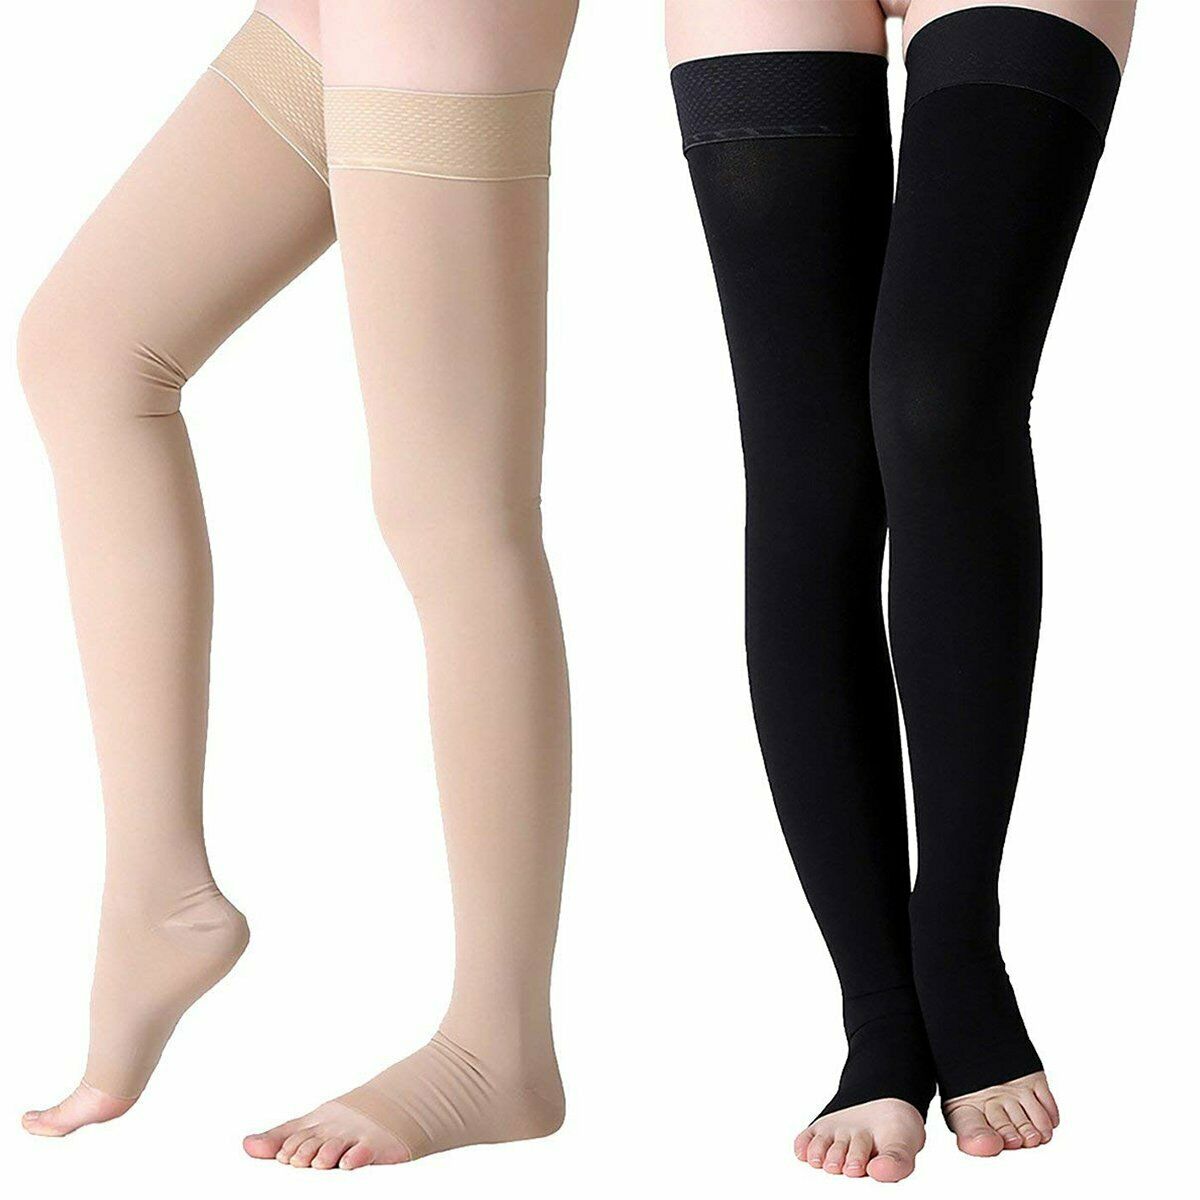 Thigh High Medical Compression Stockings 23 32mmhg Varicose Veins Support Socks Ebay